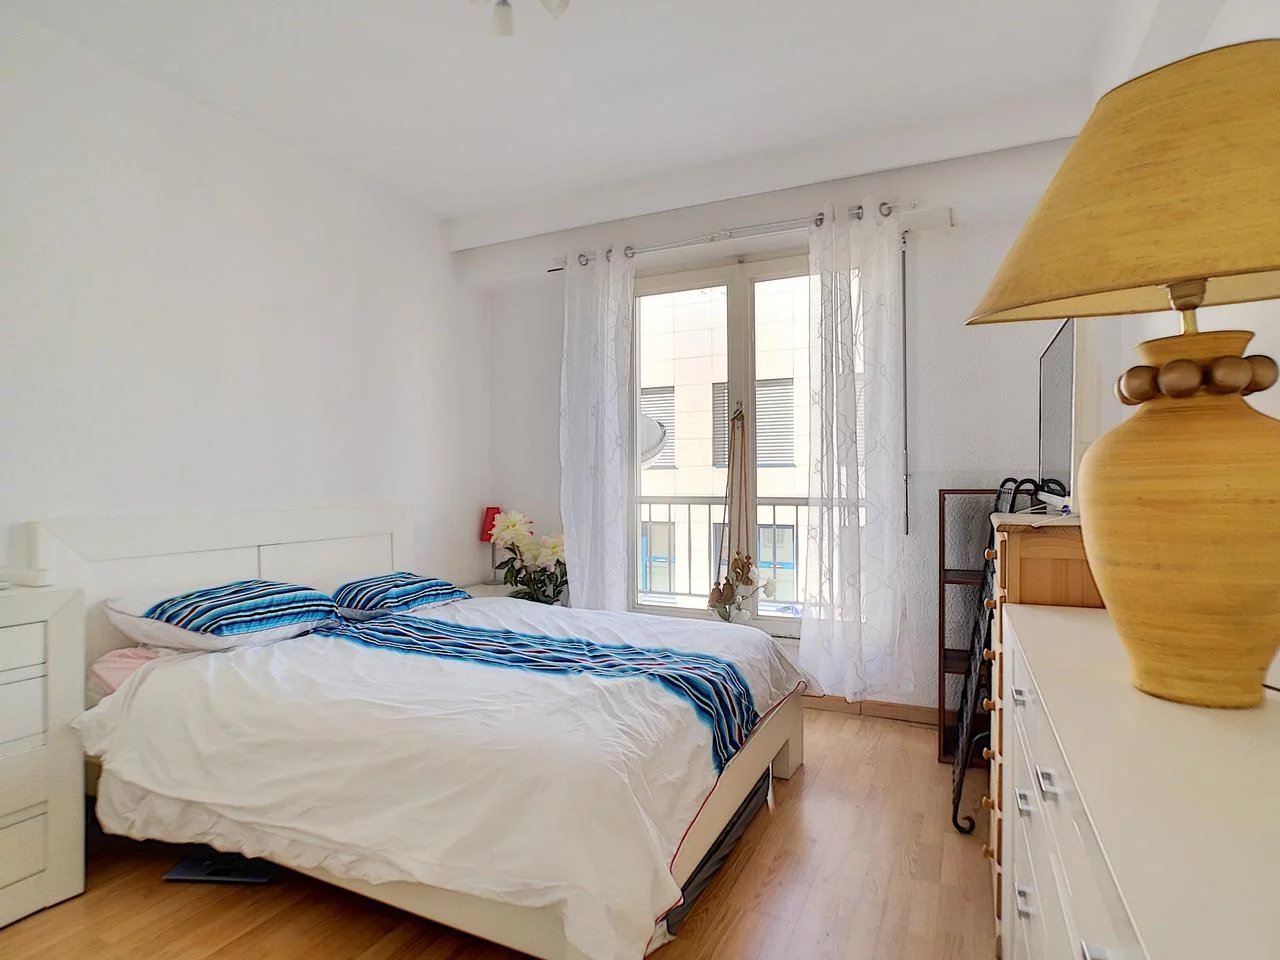 Appartement  2 Locali 46.88m2  In vendita   329 000 €